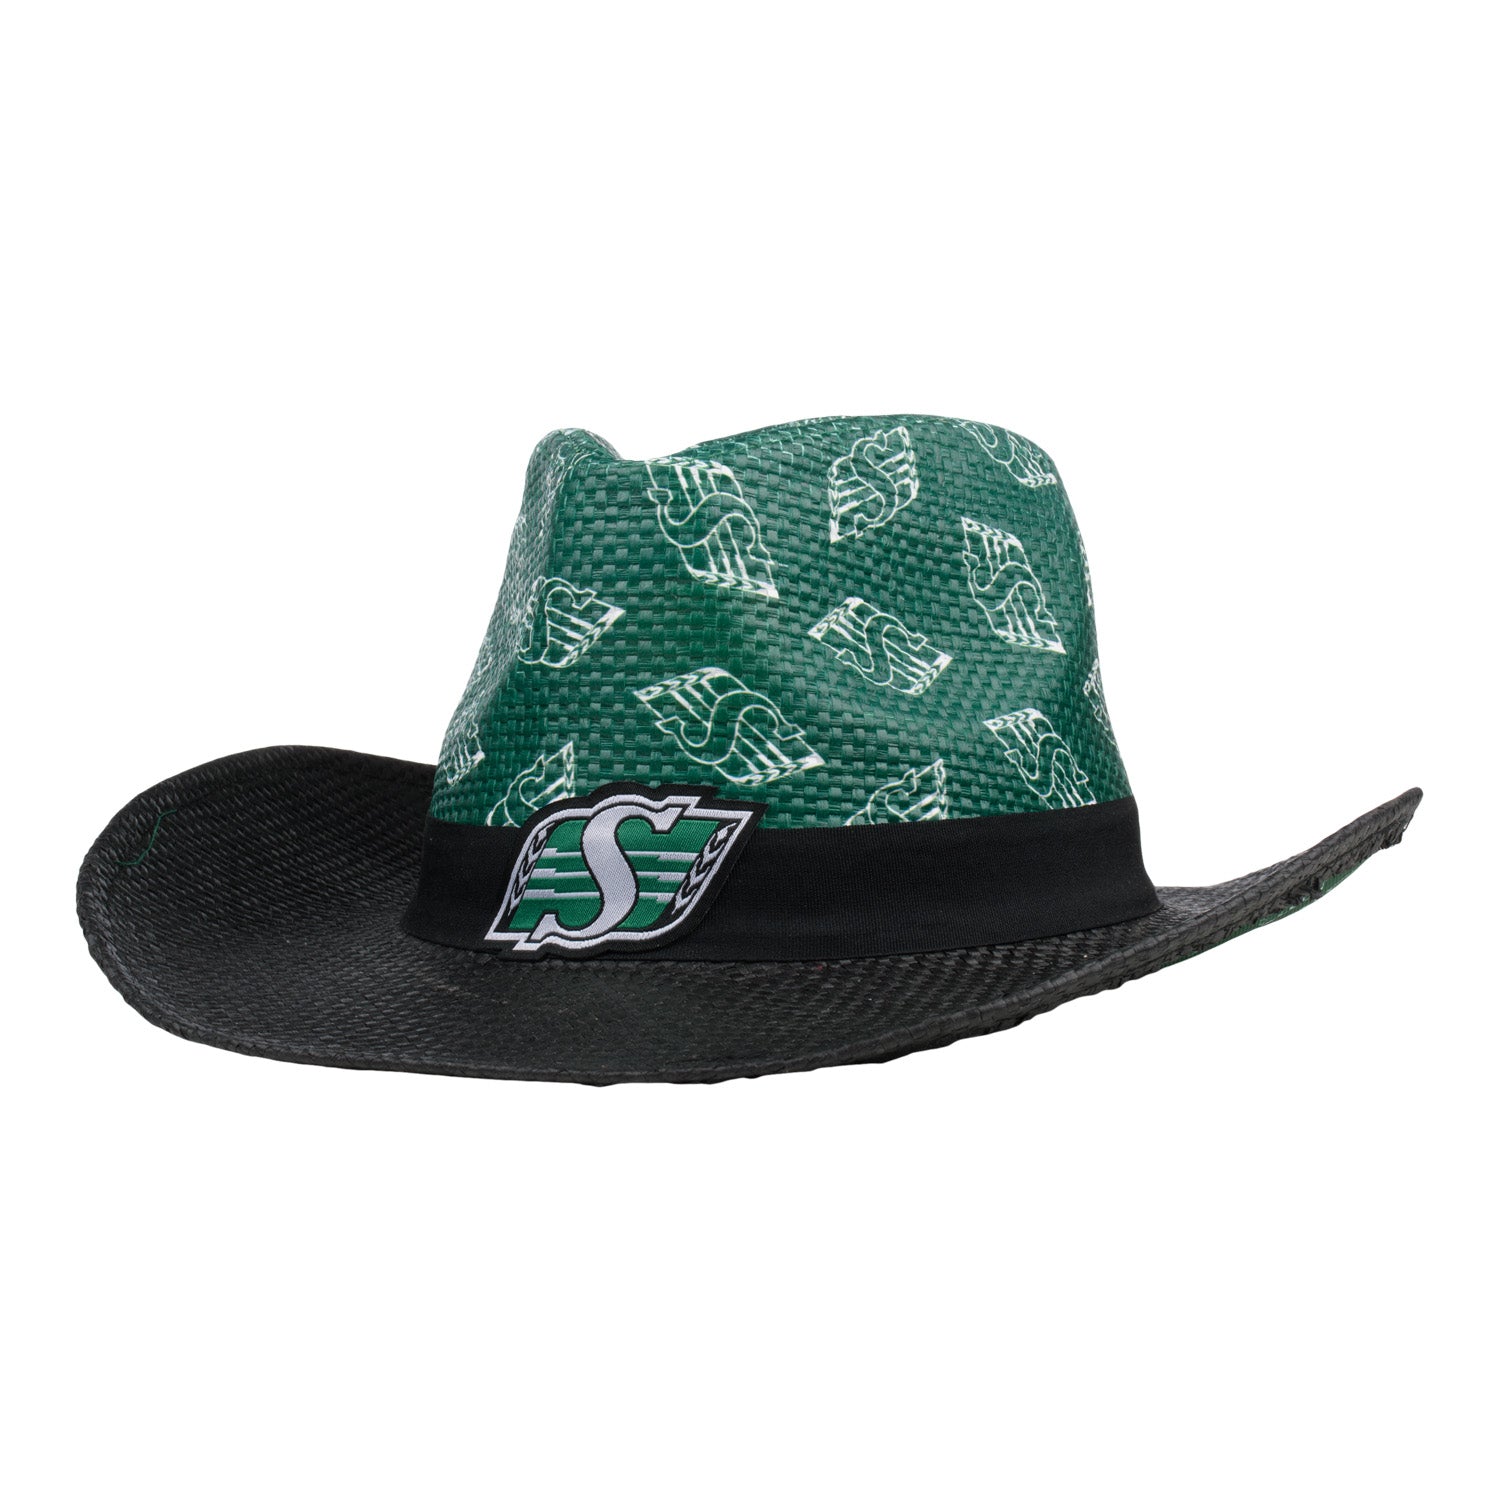 Rider Ridgetop Cowboy Hat